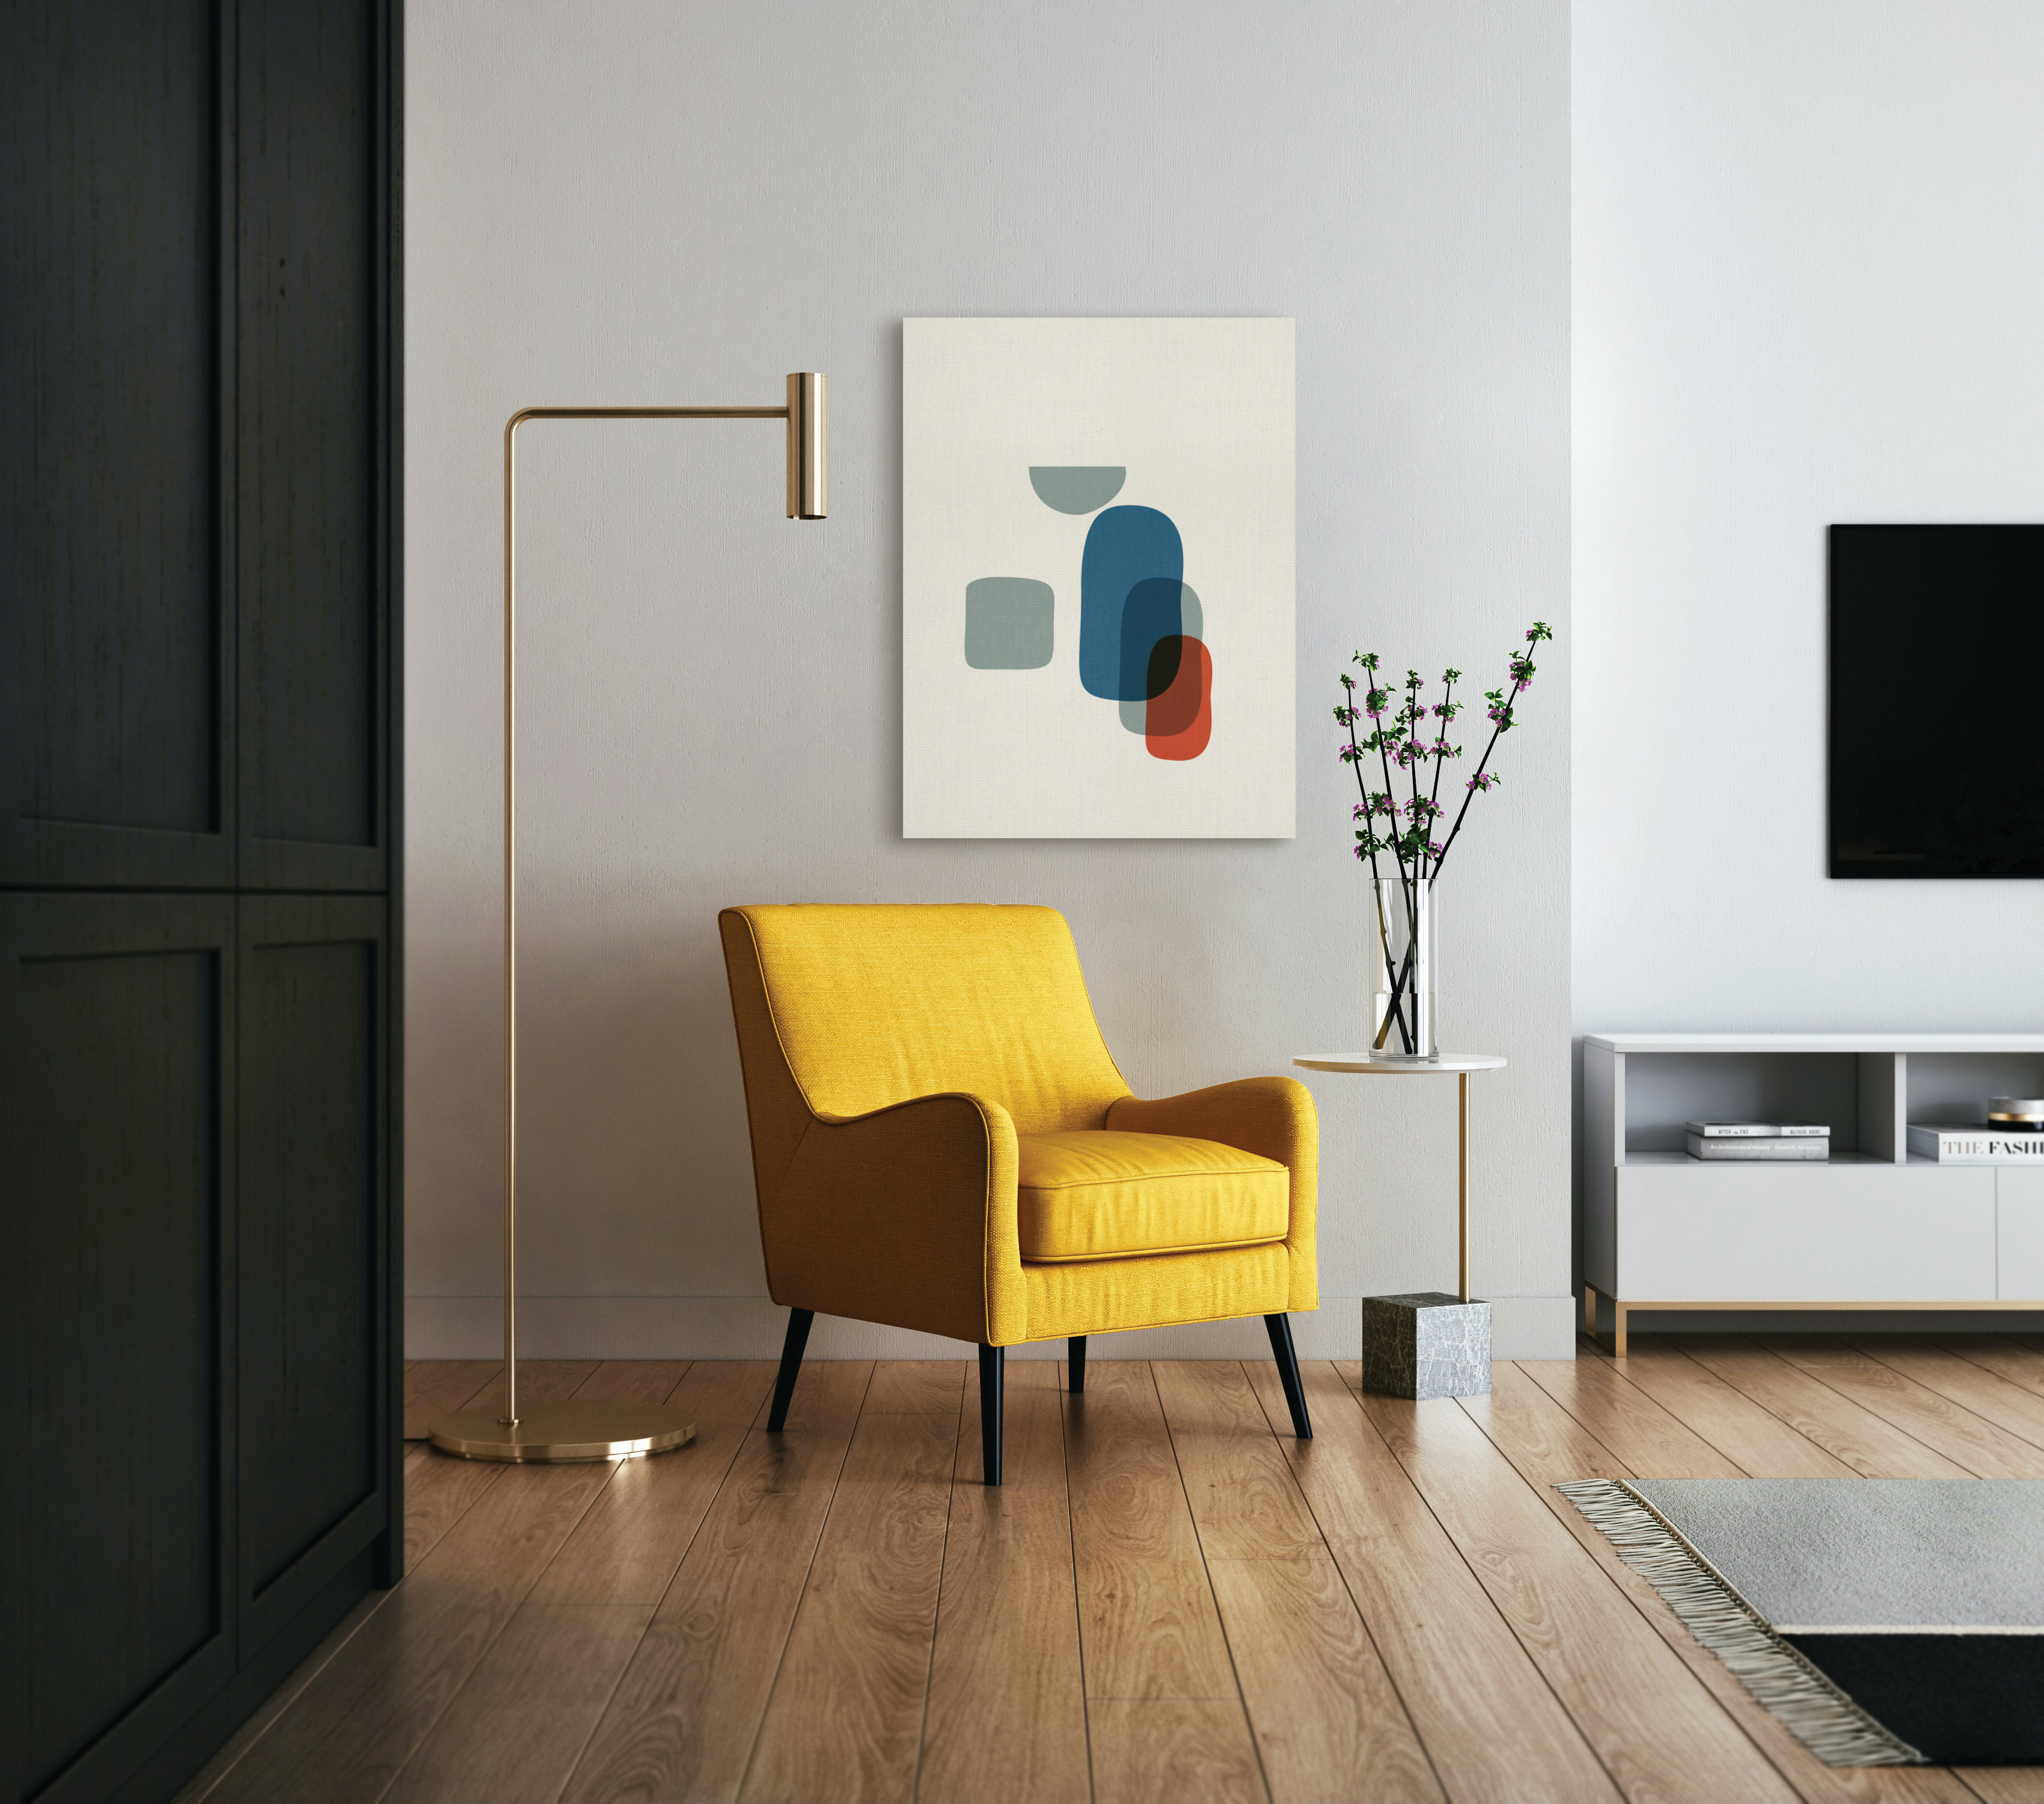 Canvas print of generative art in living room